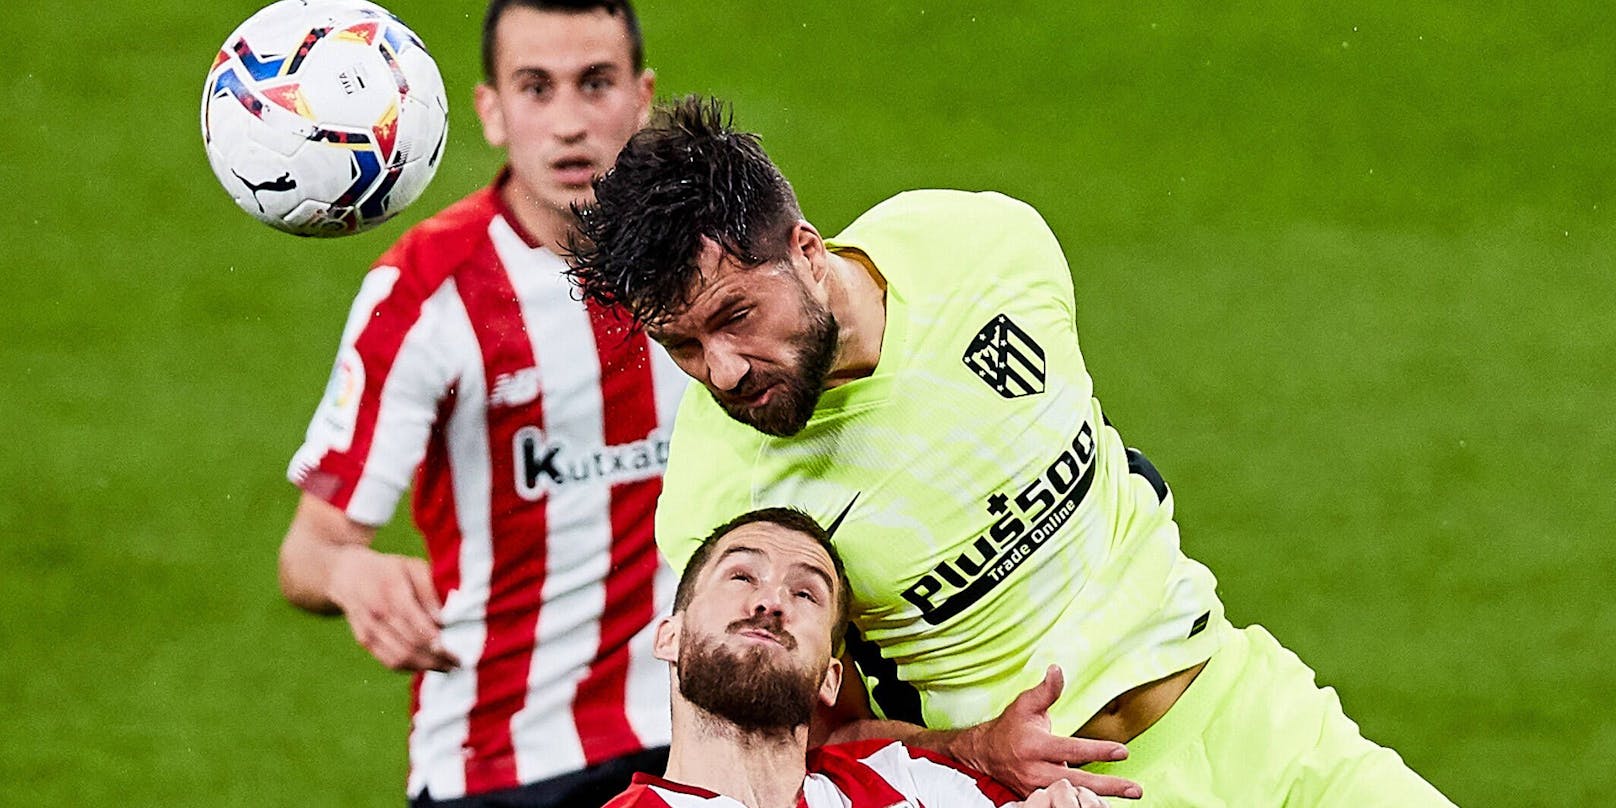 Atletico verlor gegen Bilbao mit 1:2.